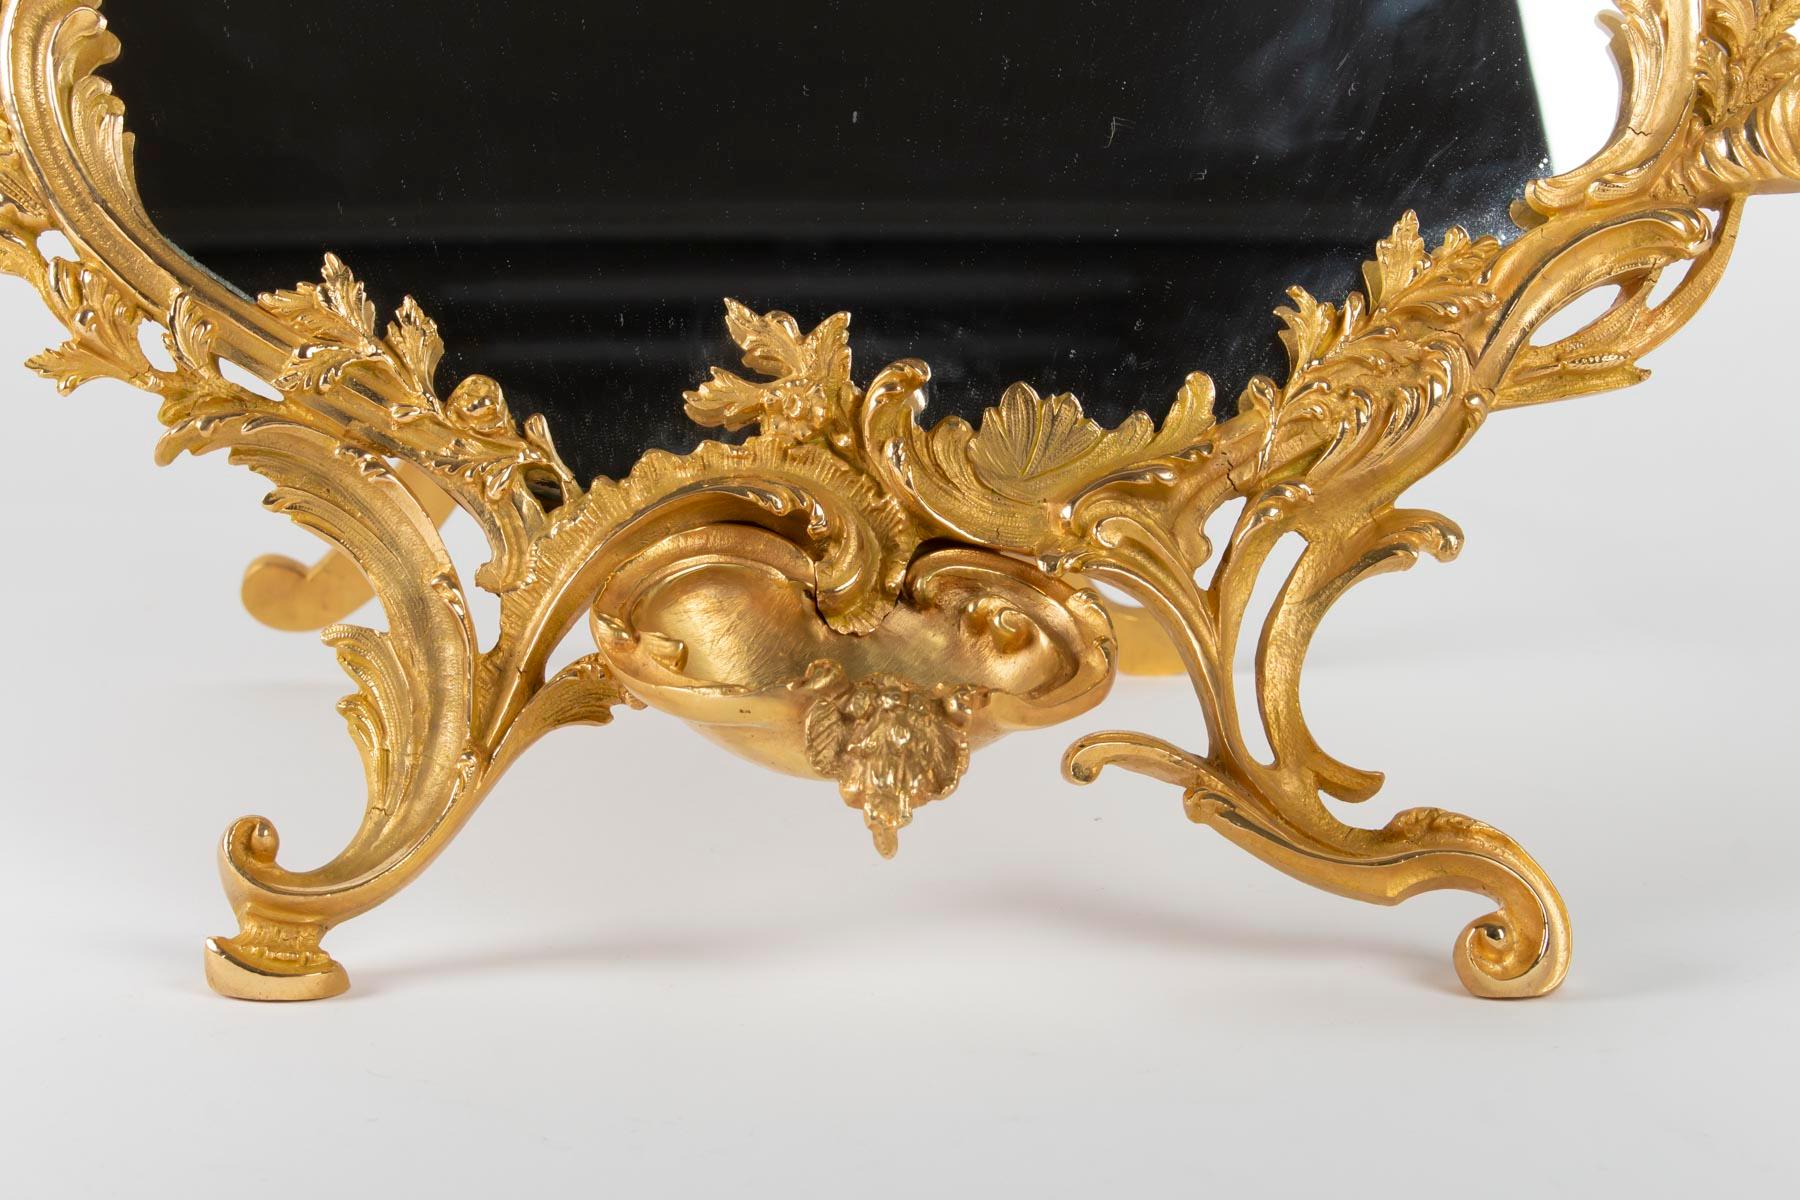 French Important Gilt Bronze Table Mirror, Napoleon III Period, 1870-1880